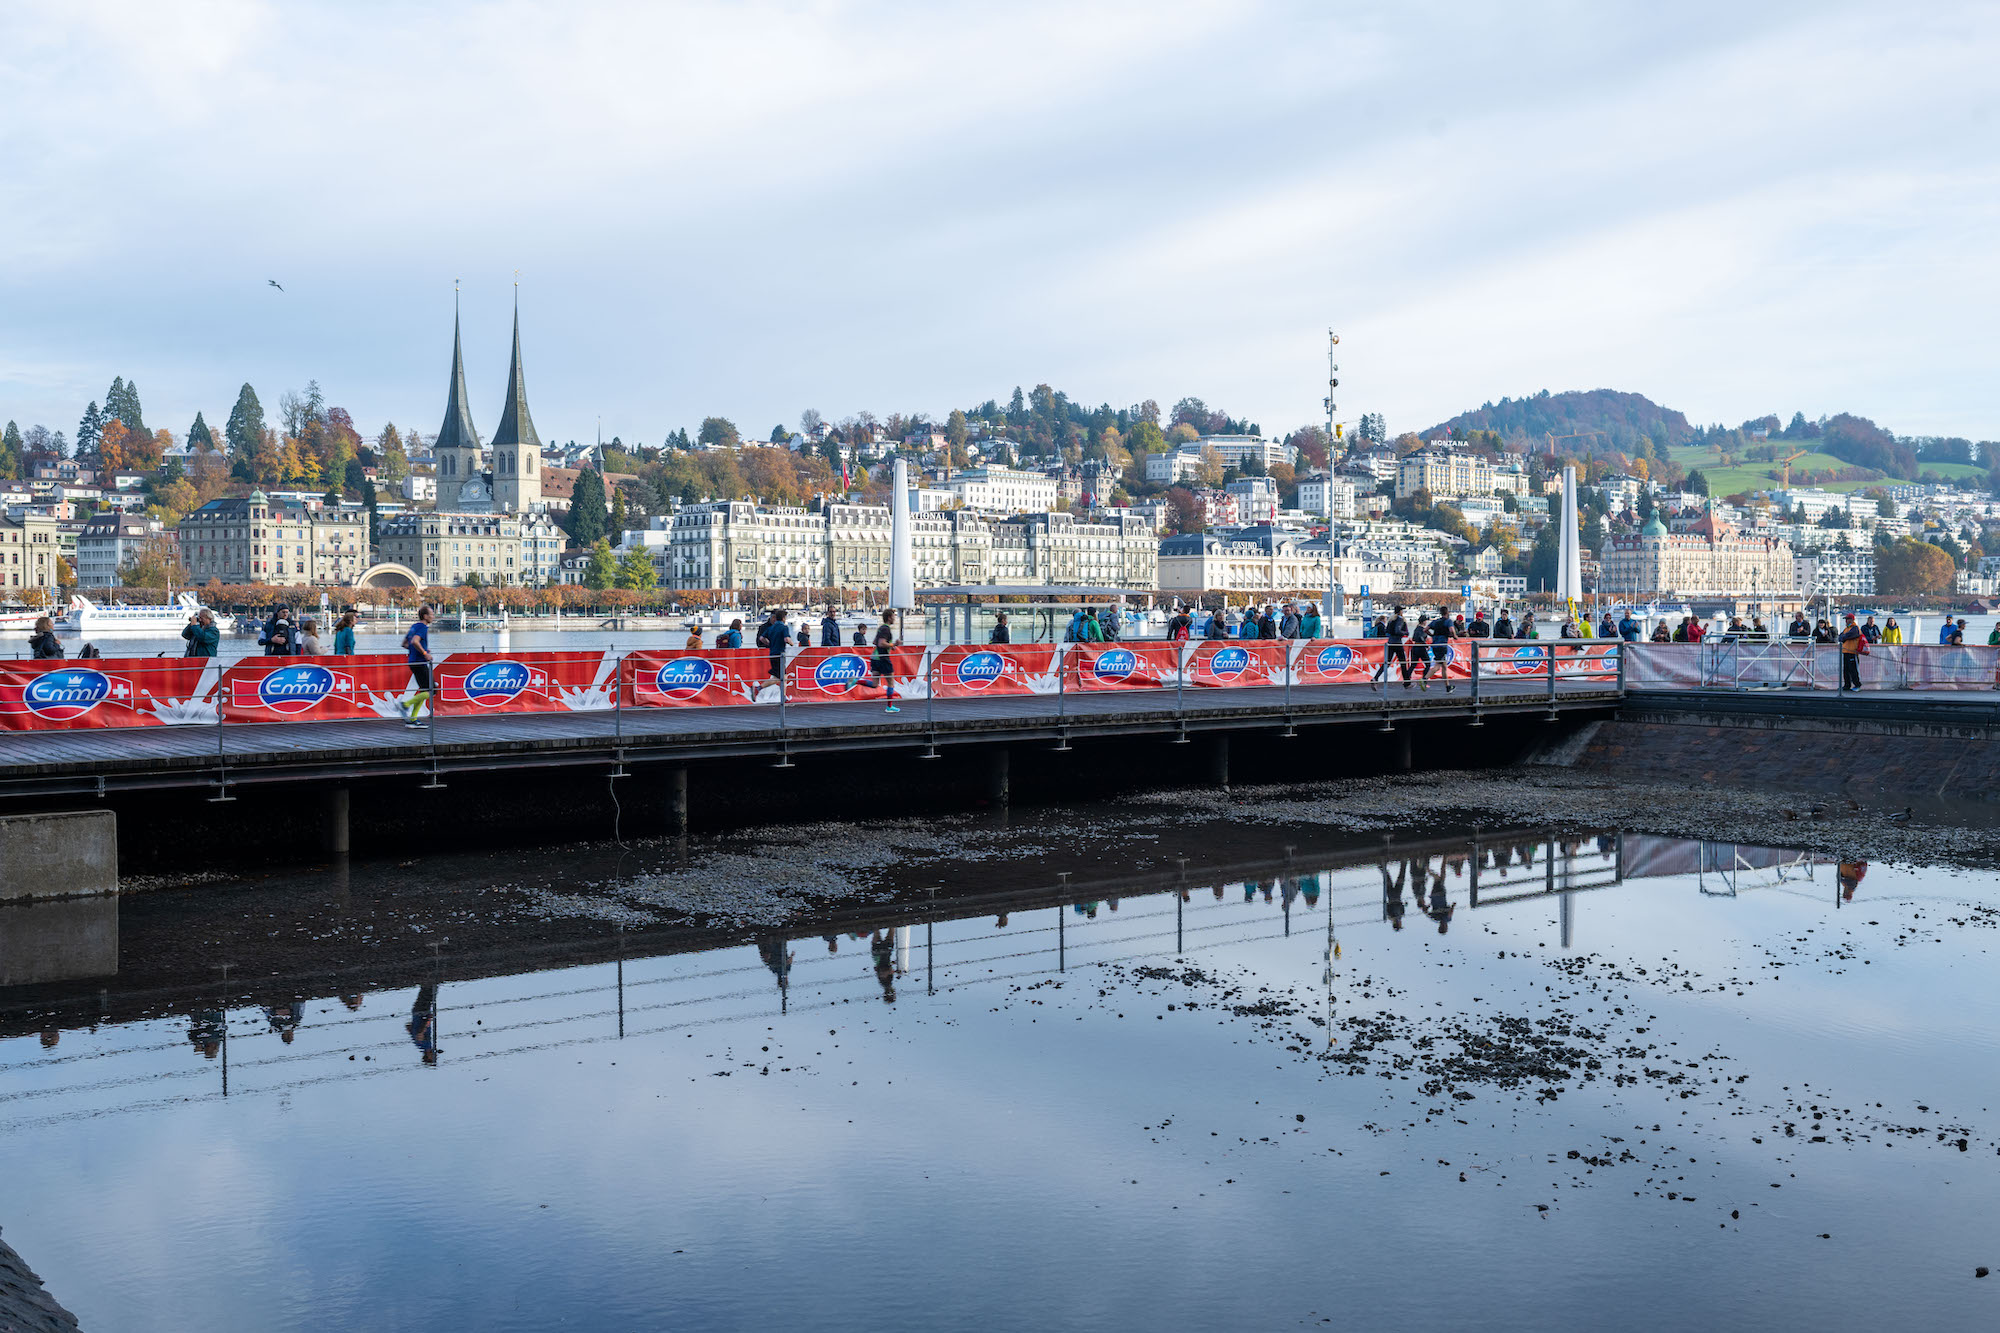 Swiss City Marathon 2021 Luzern